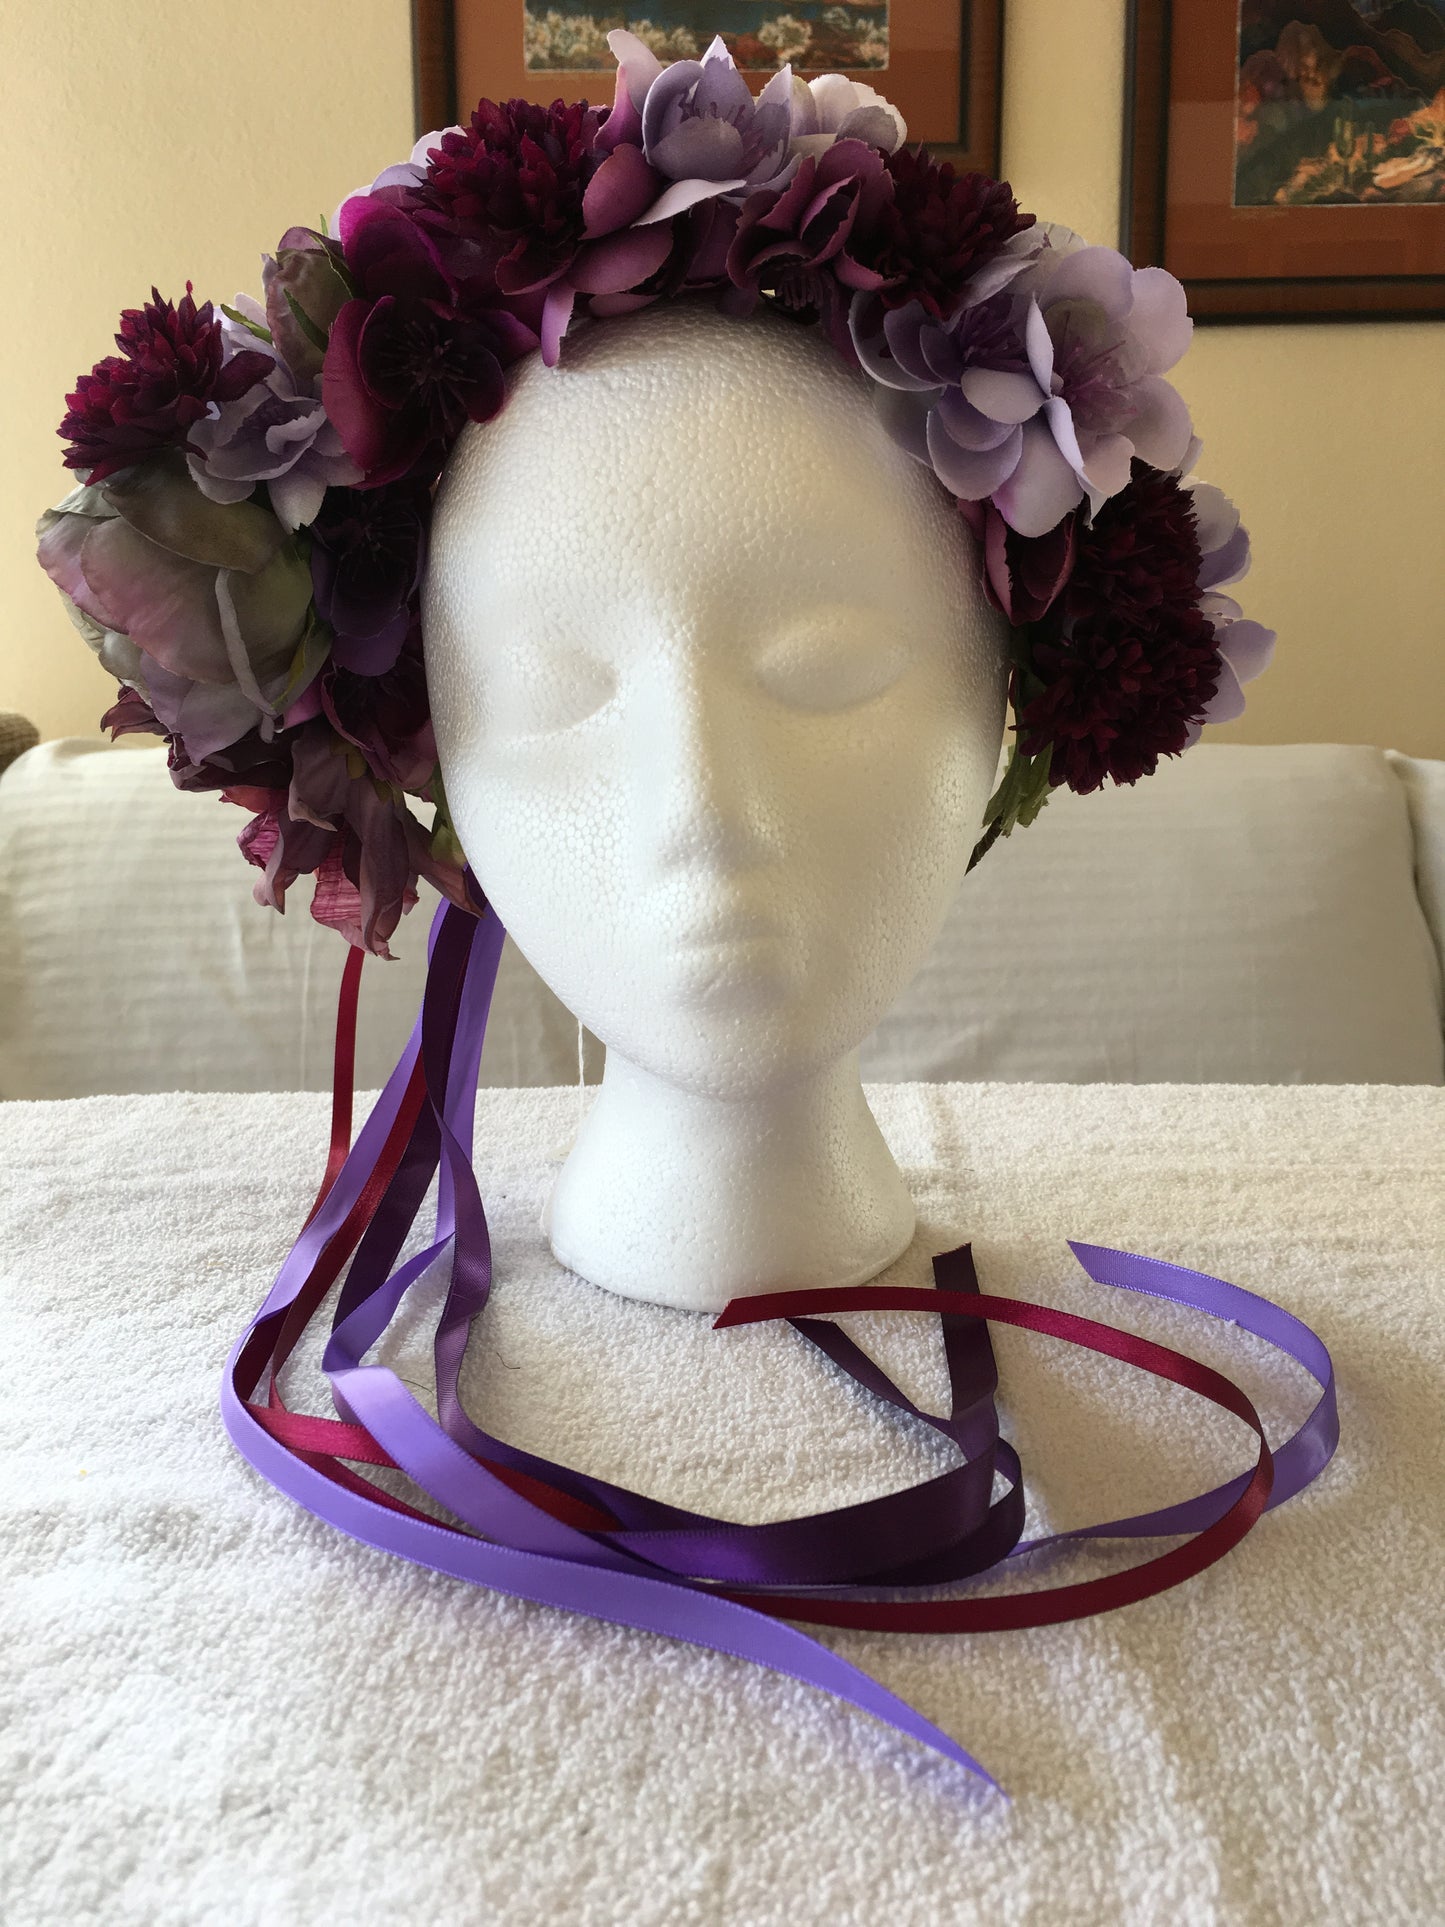 Medium Wreath - Deep purple flowers w/ purple band